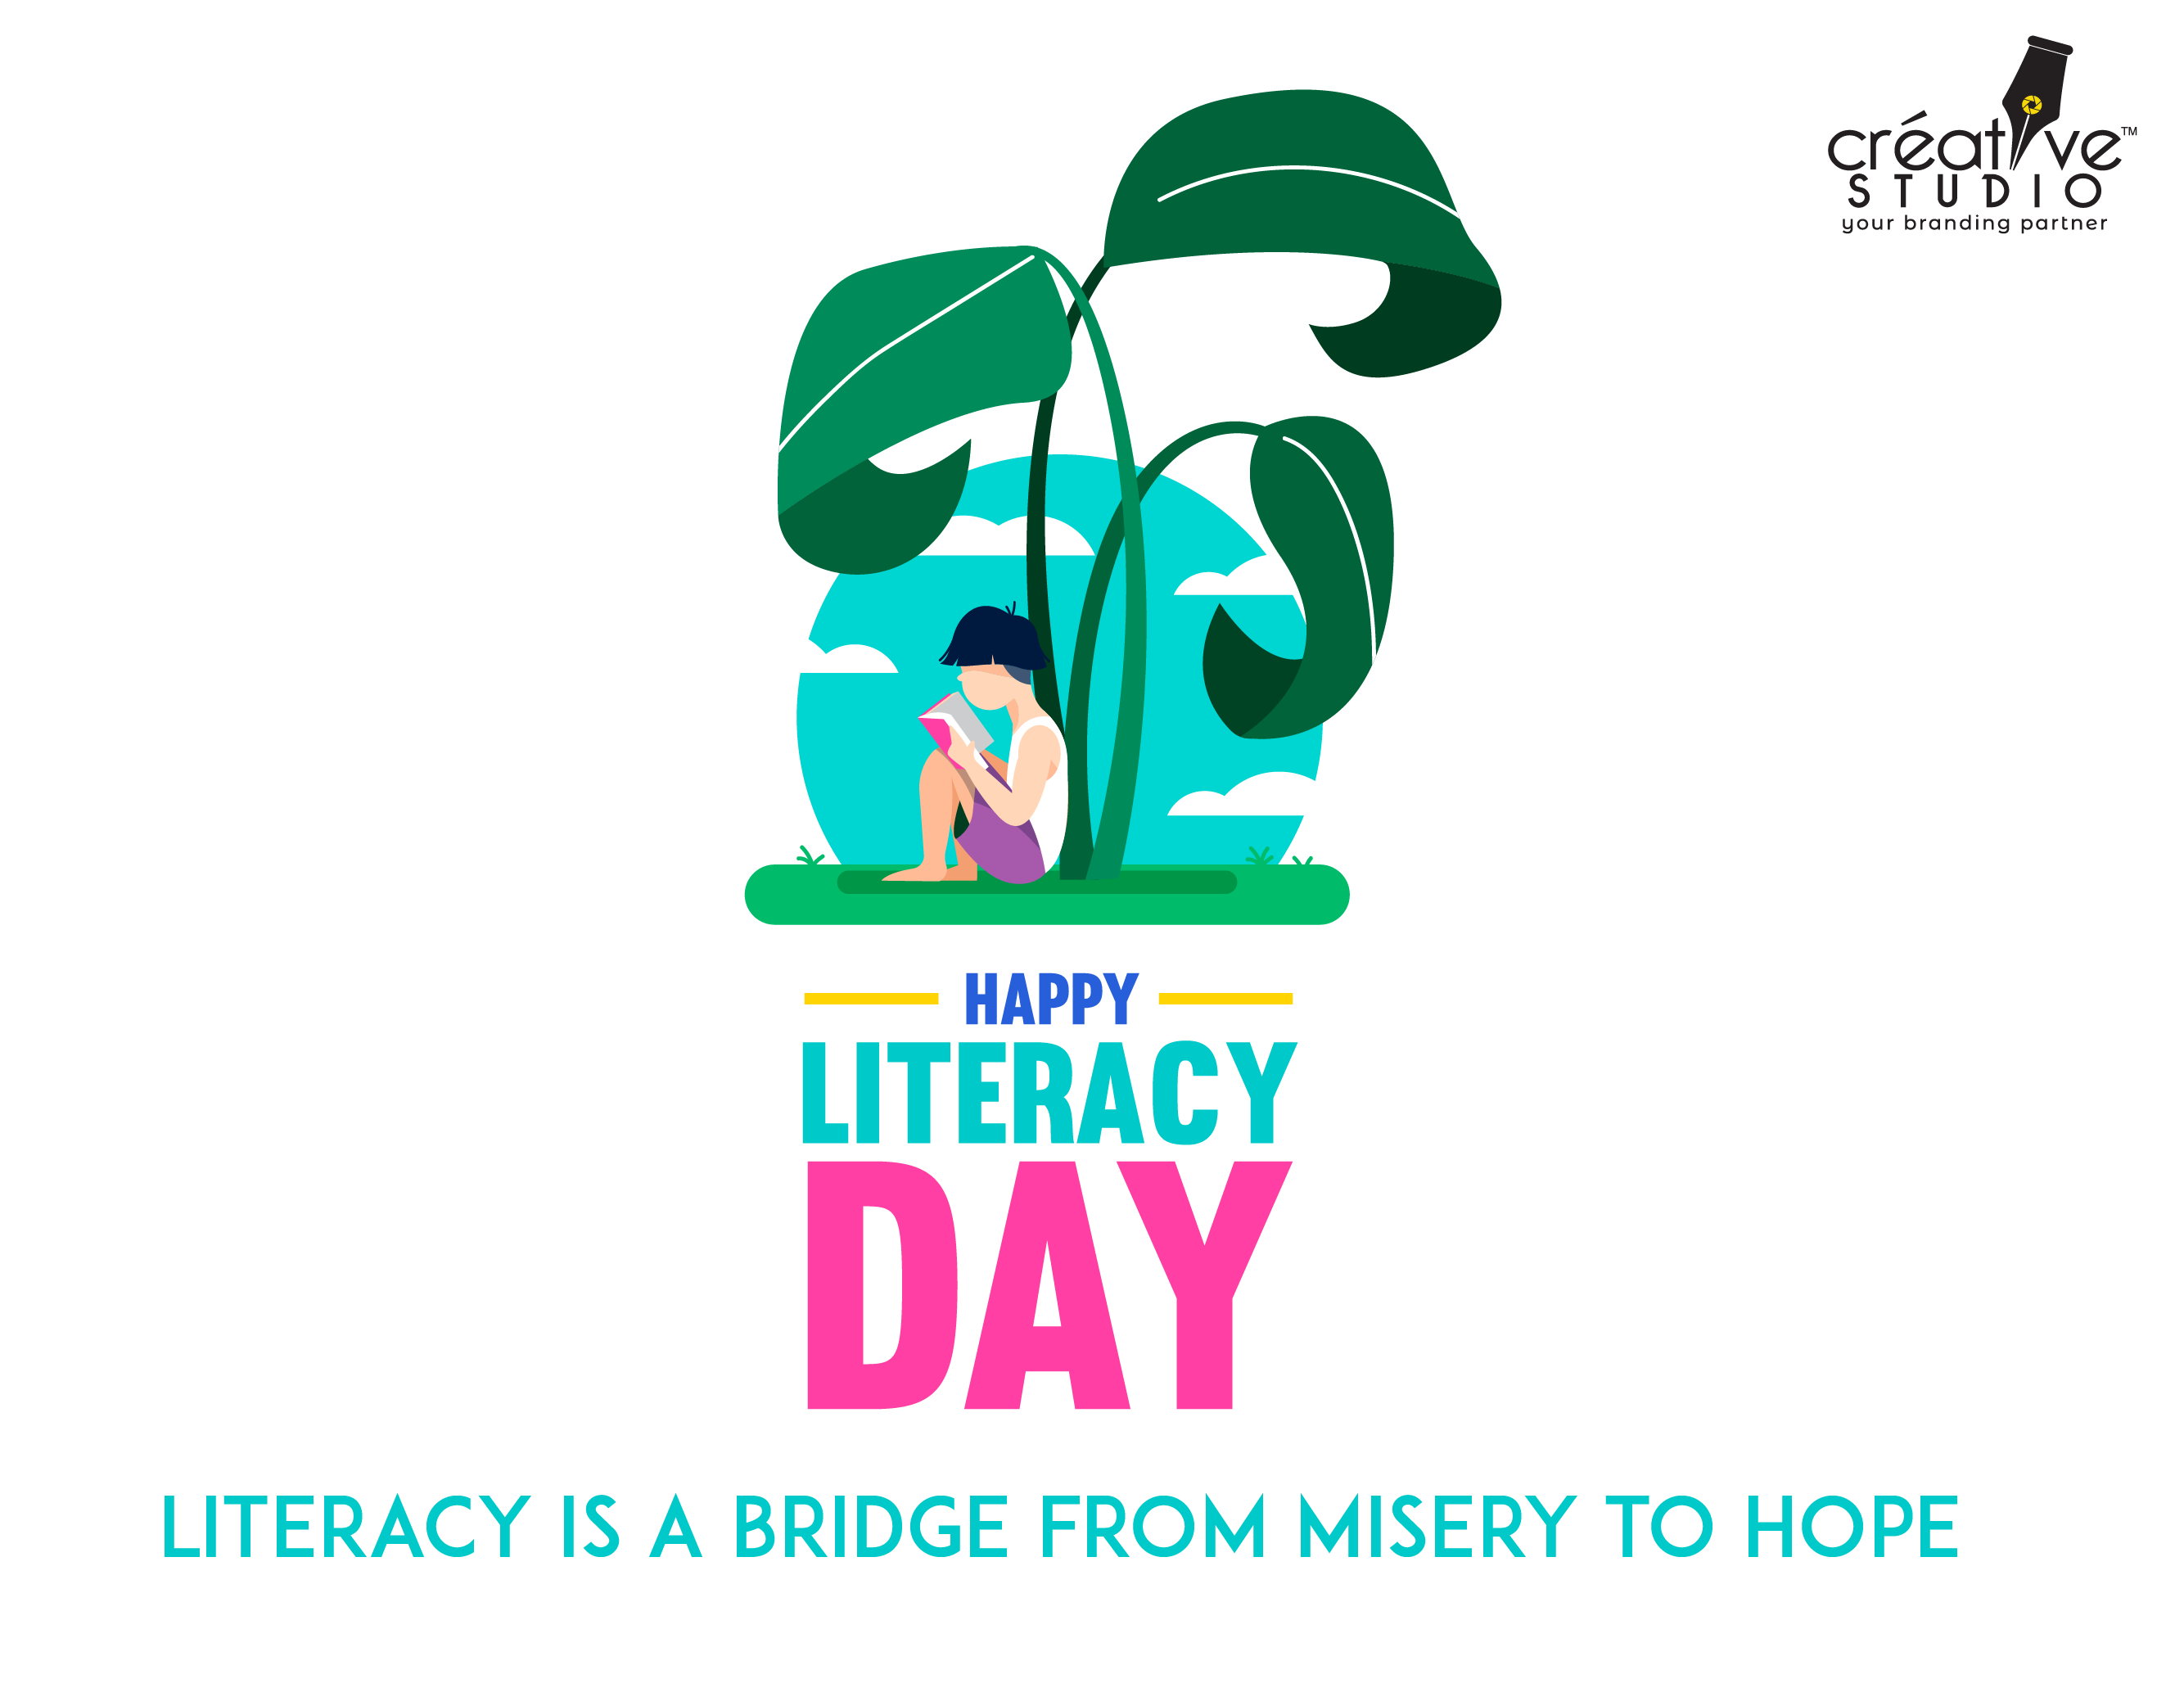 LITERACY DAY 05 - Literacy Day